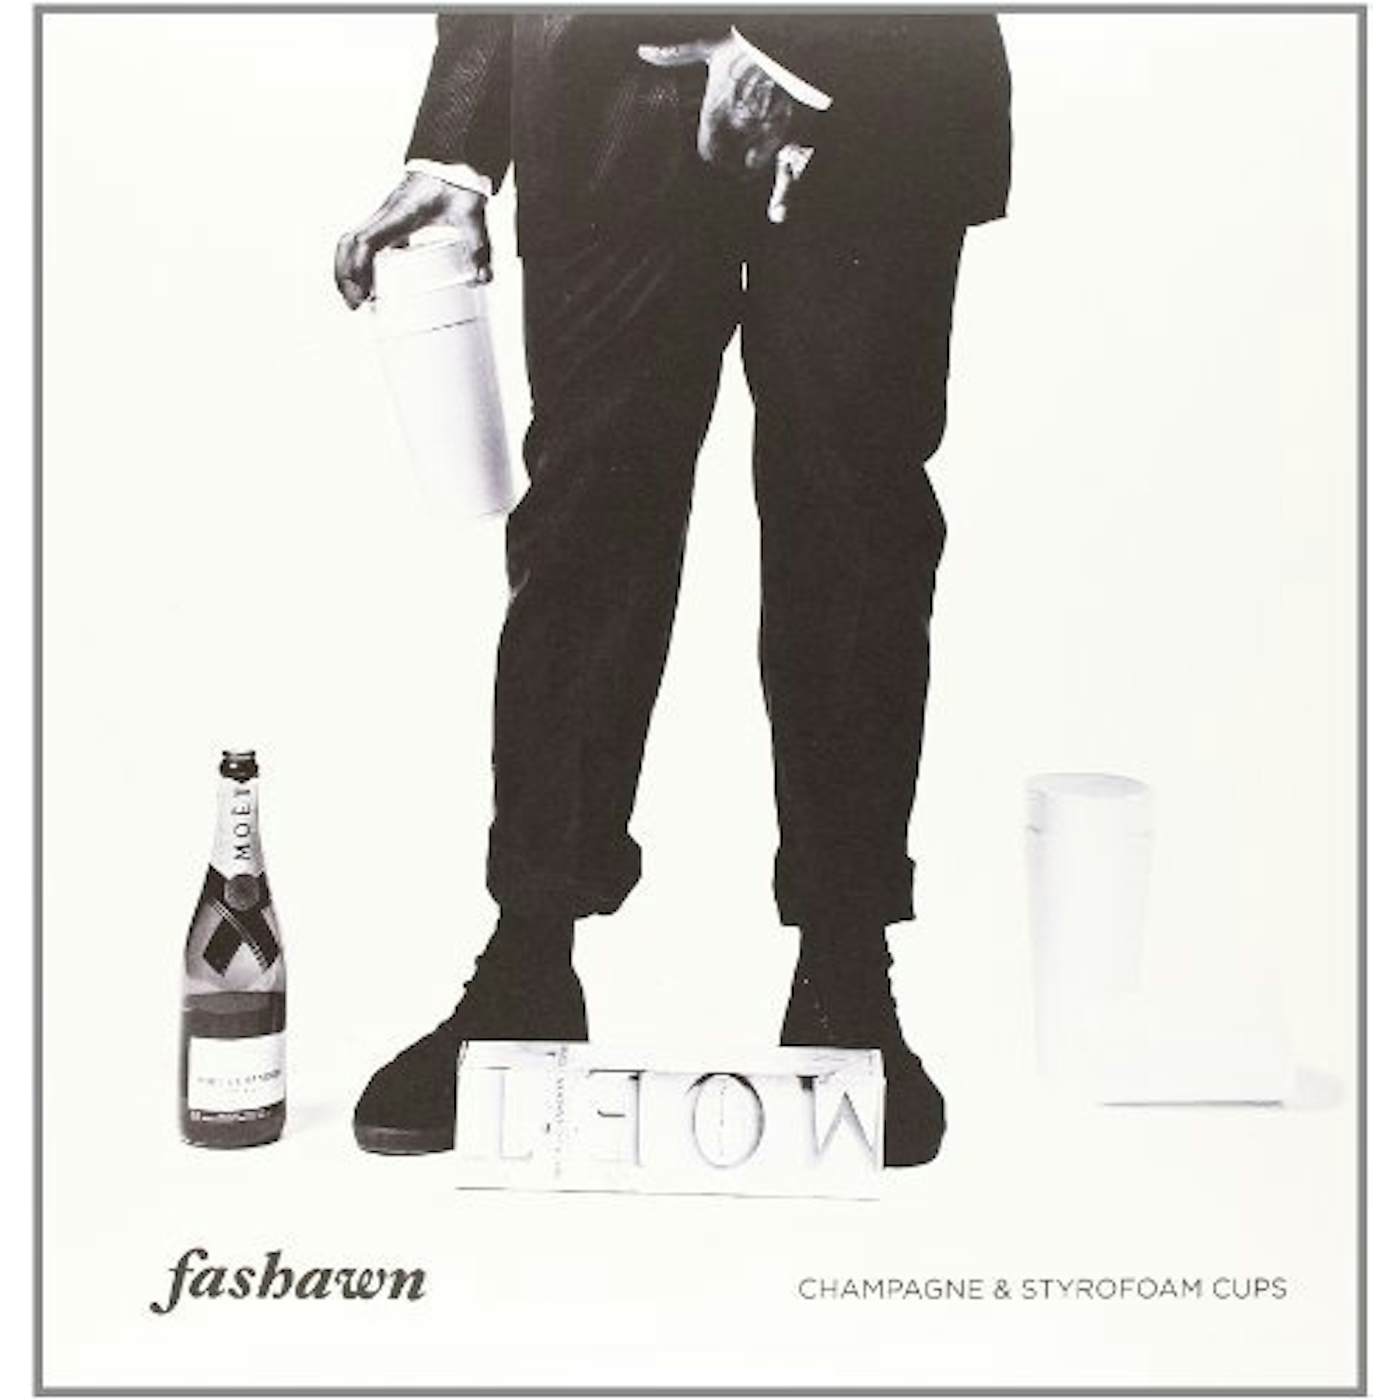 Fashawn Champagne & Styrofoam Cups Vinyl Record